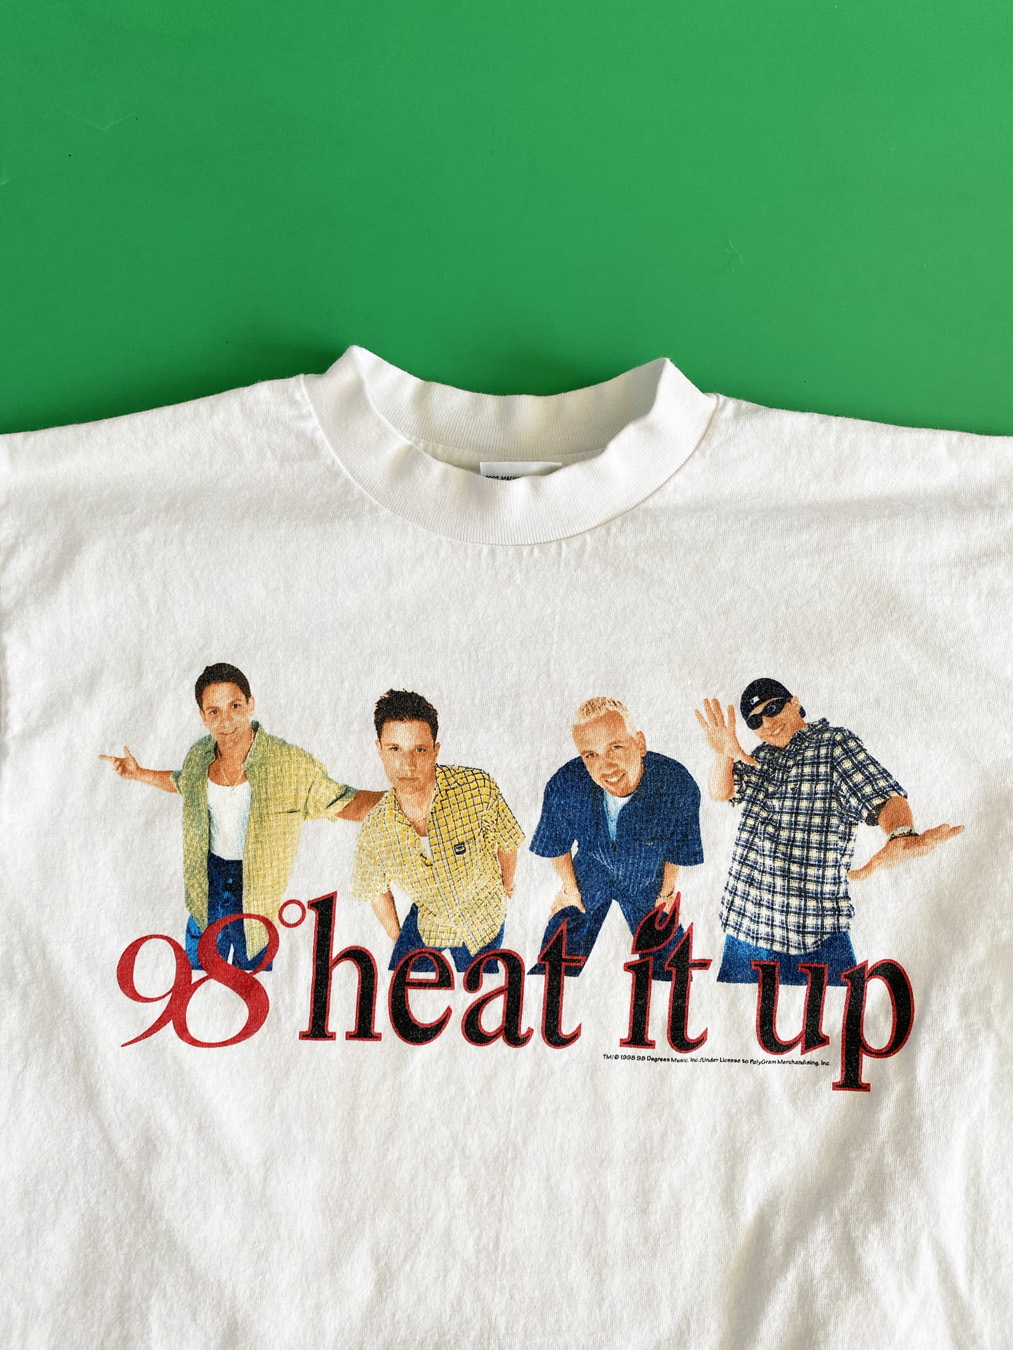 1998 98 Degrees 'Heat It Up' T-Shirt